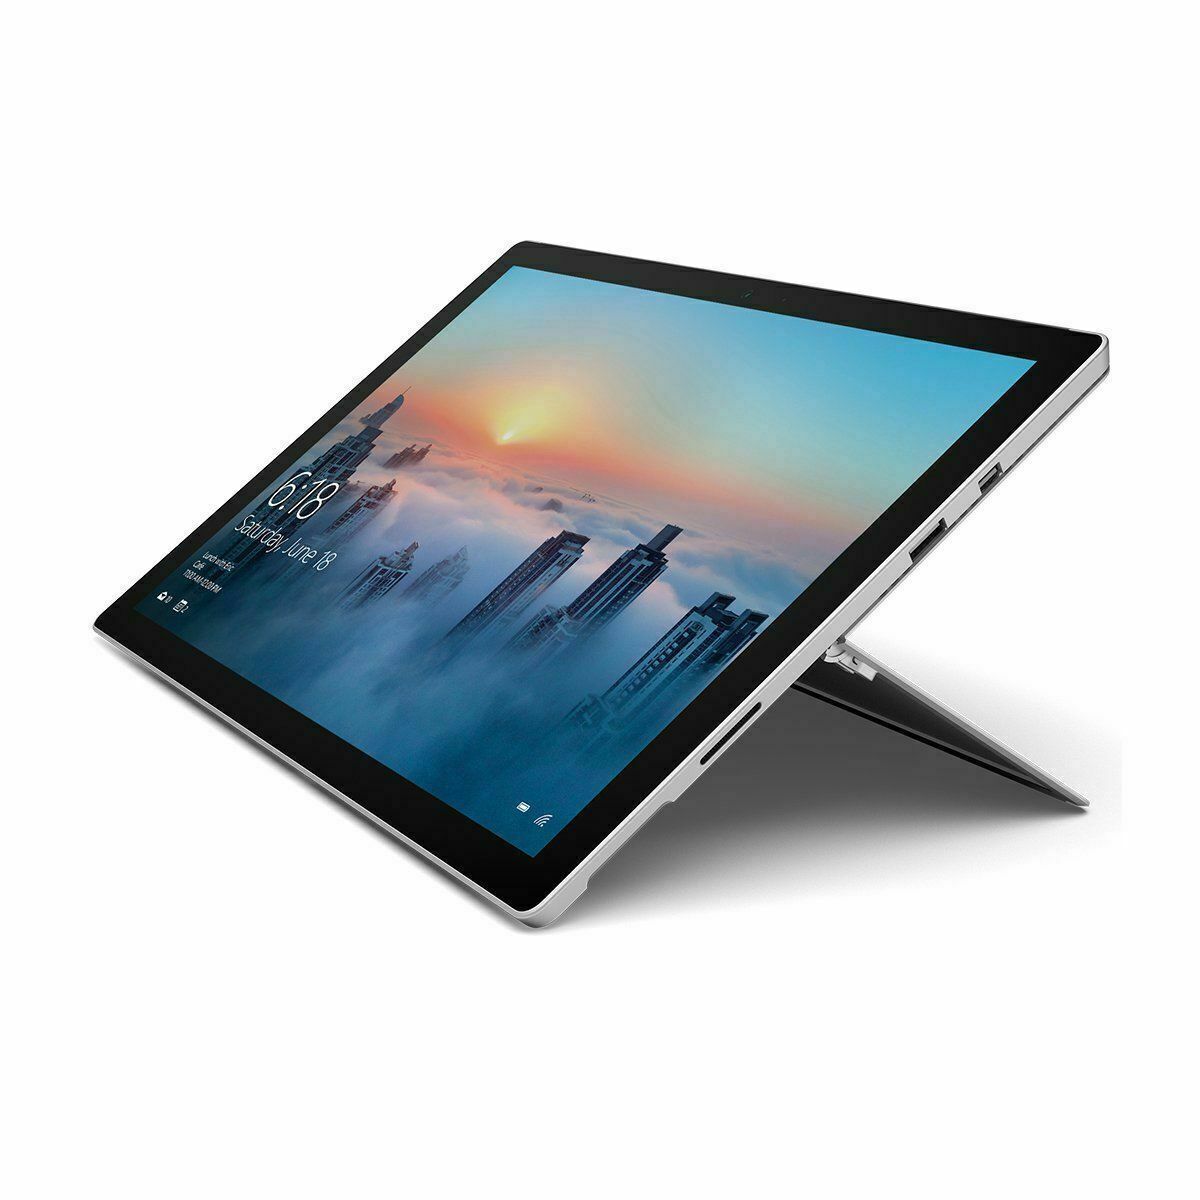 Microsoft Surface Pro 5 Win 10 128GB SSD Good Condition